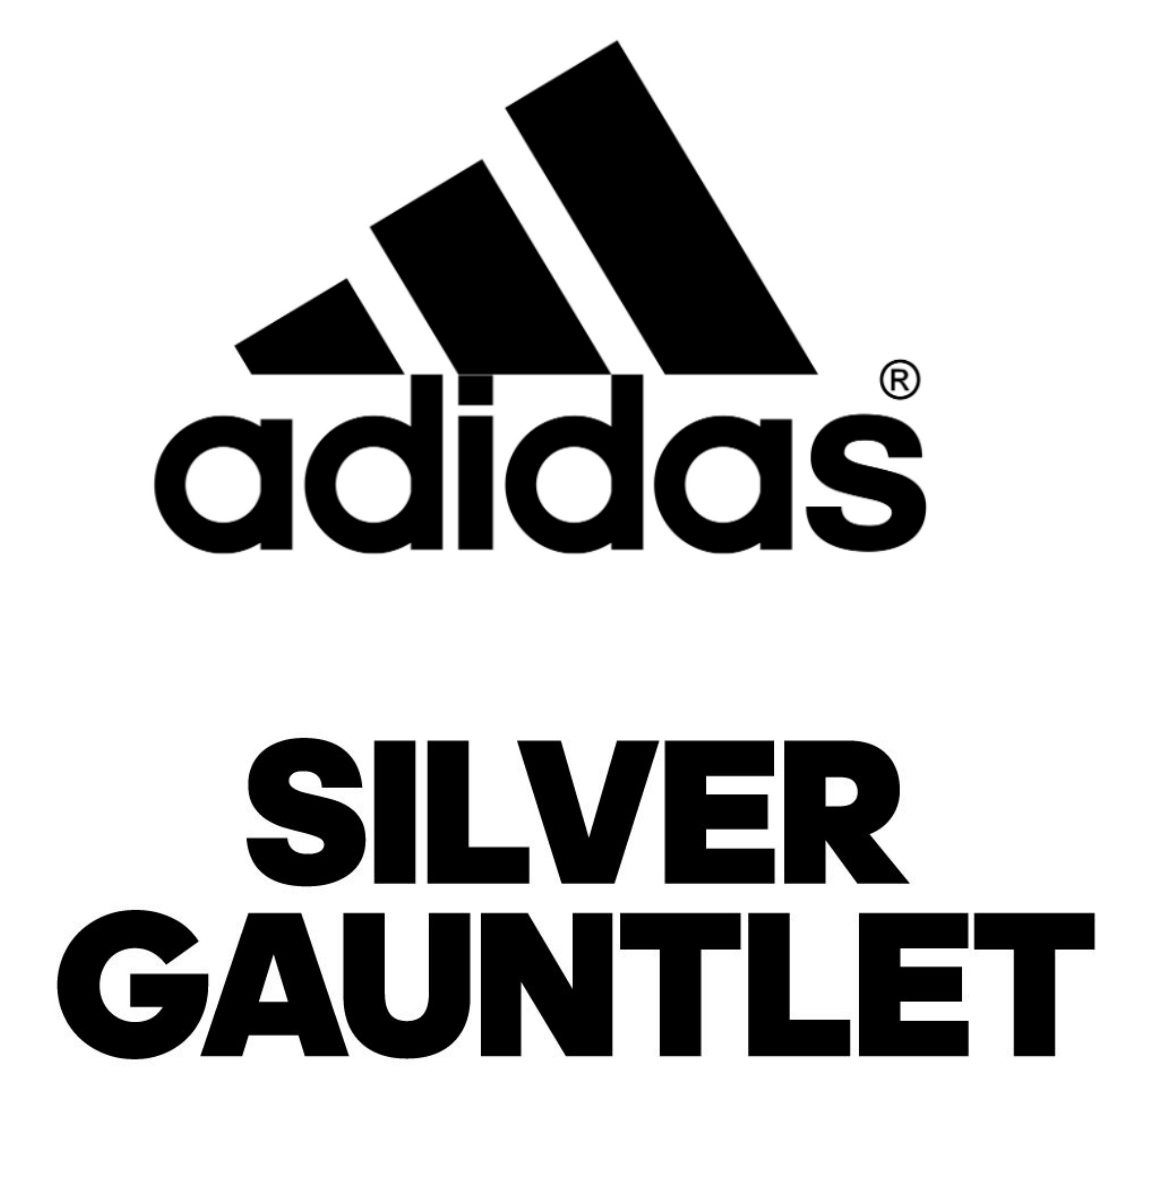 Adidas Silver Gauntlet Team/Program! Birmingham Blaze